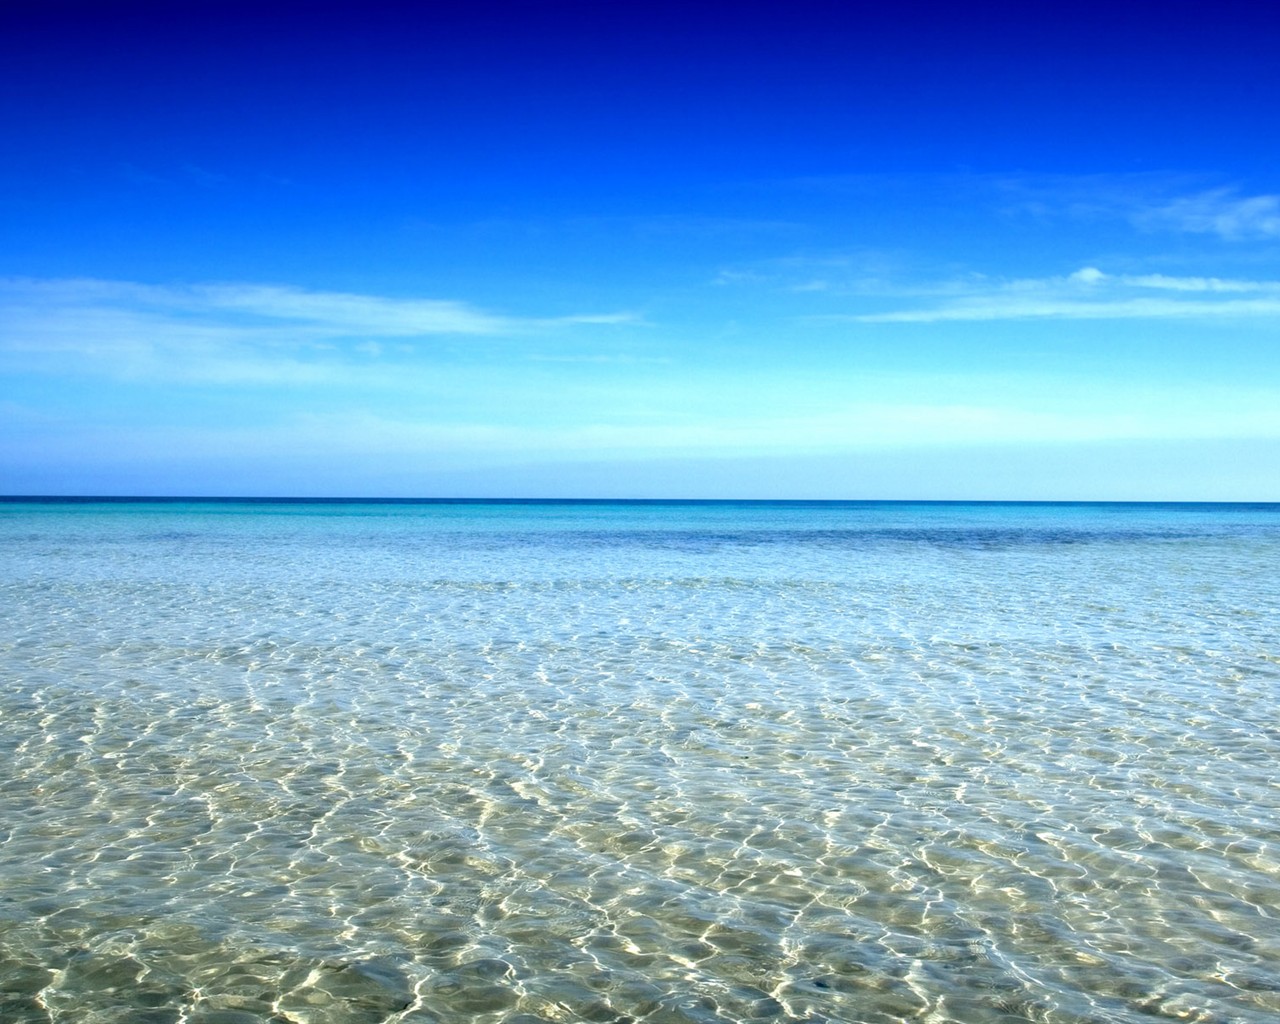 The beautiful seaside scenery HD Wallpapers #8 - 1280x1024